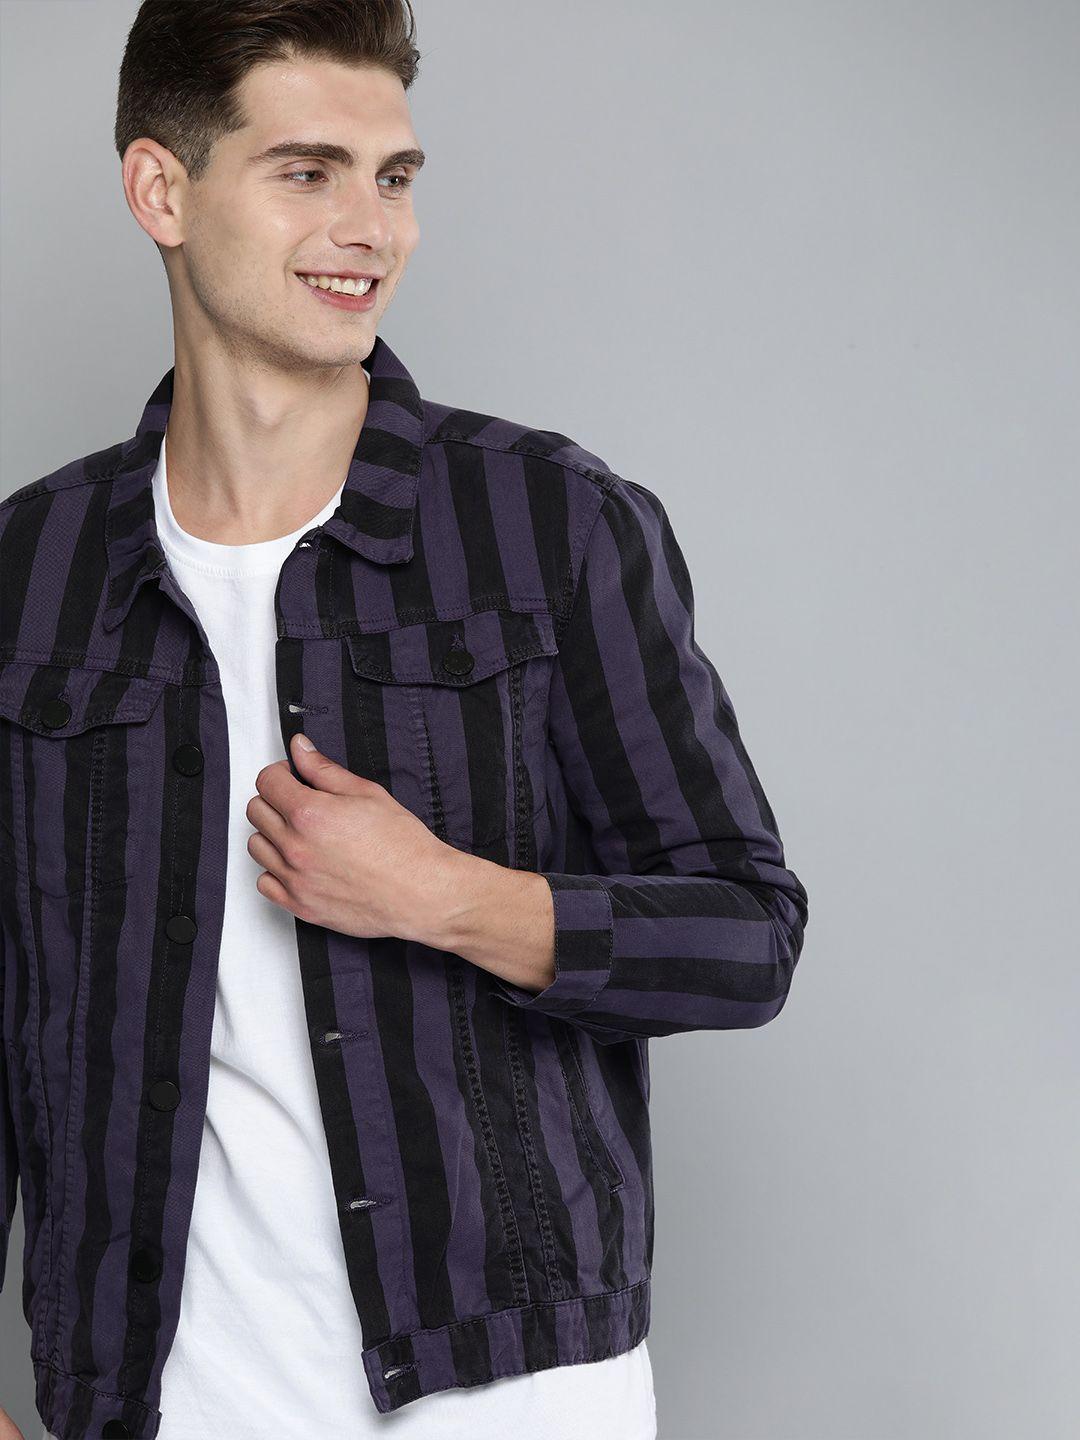 here&now-men-purple-&-black-striped-tailored-jacket